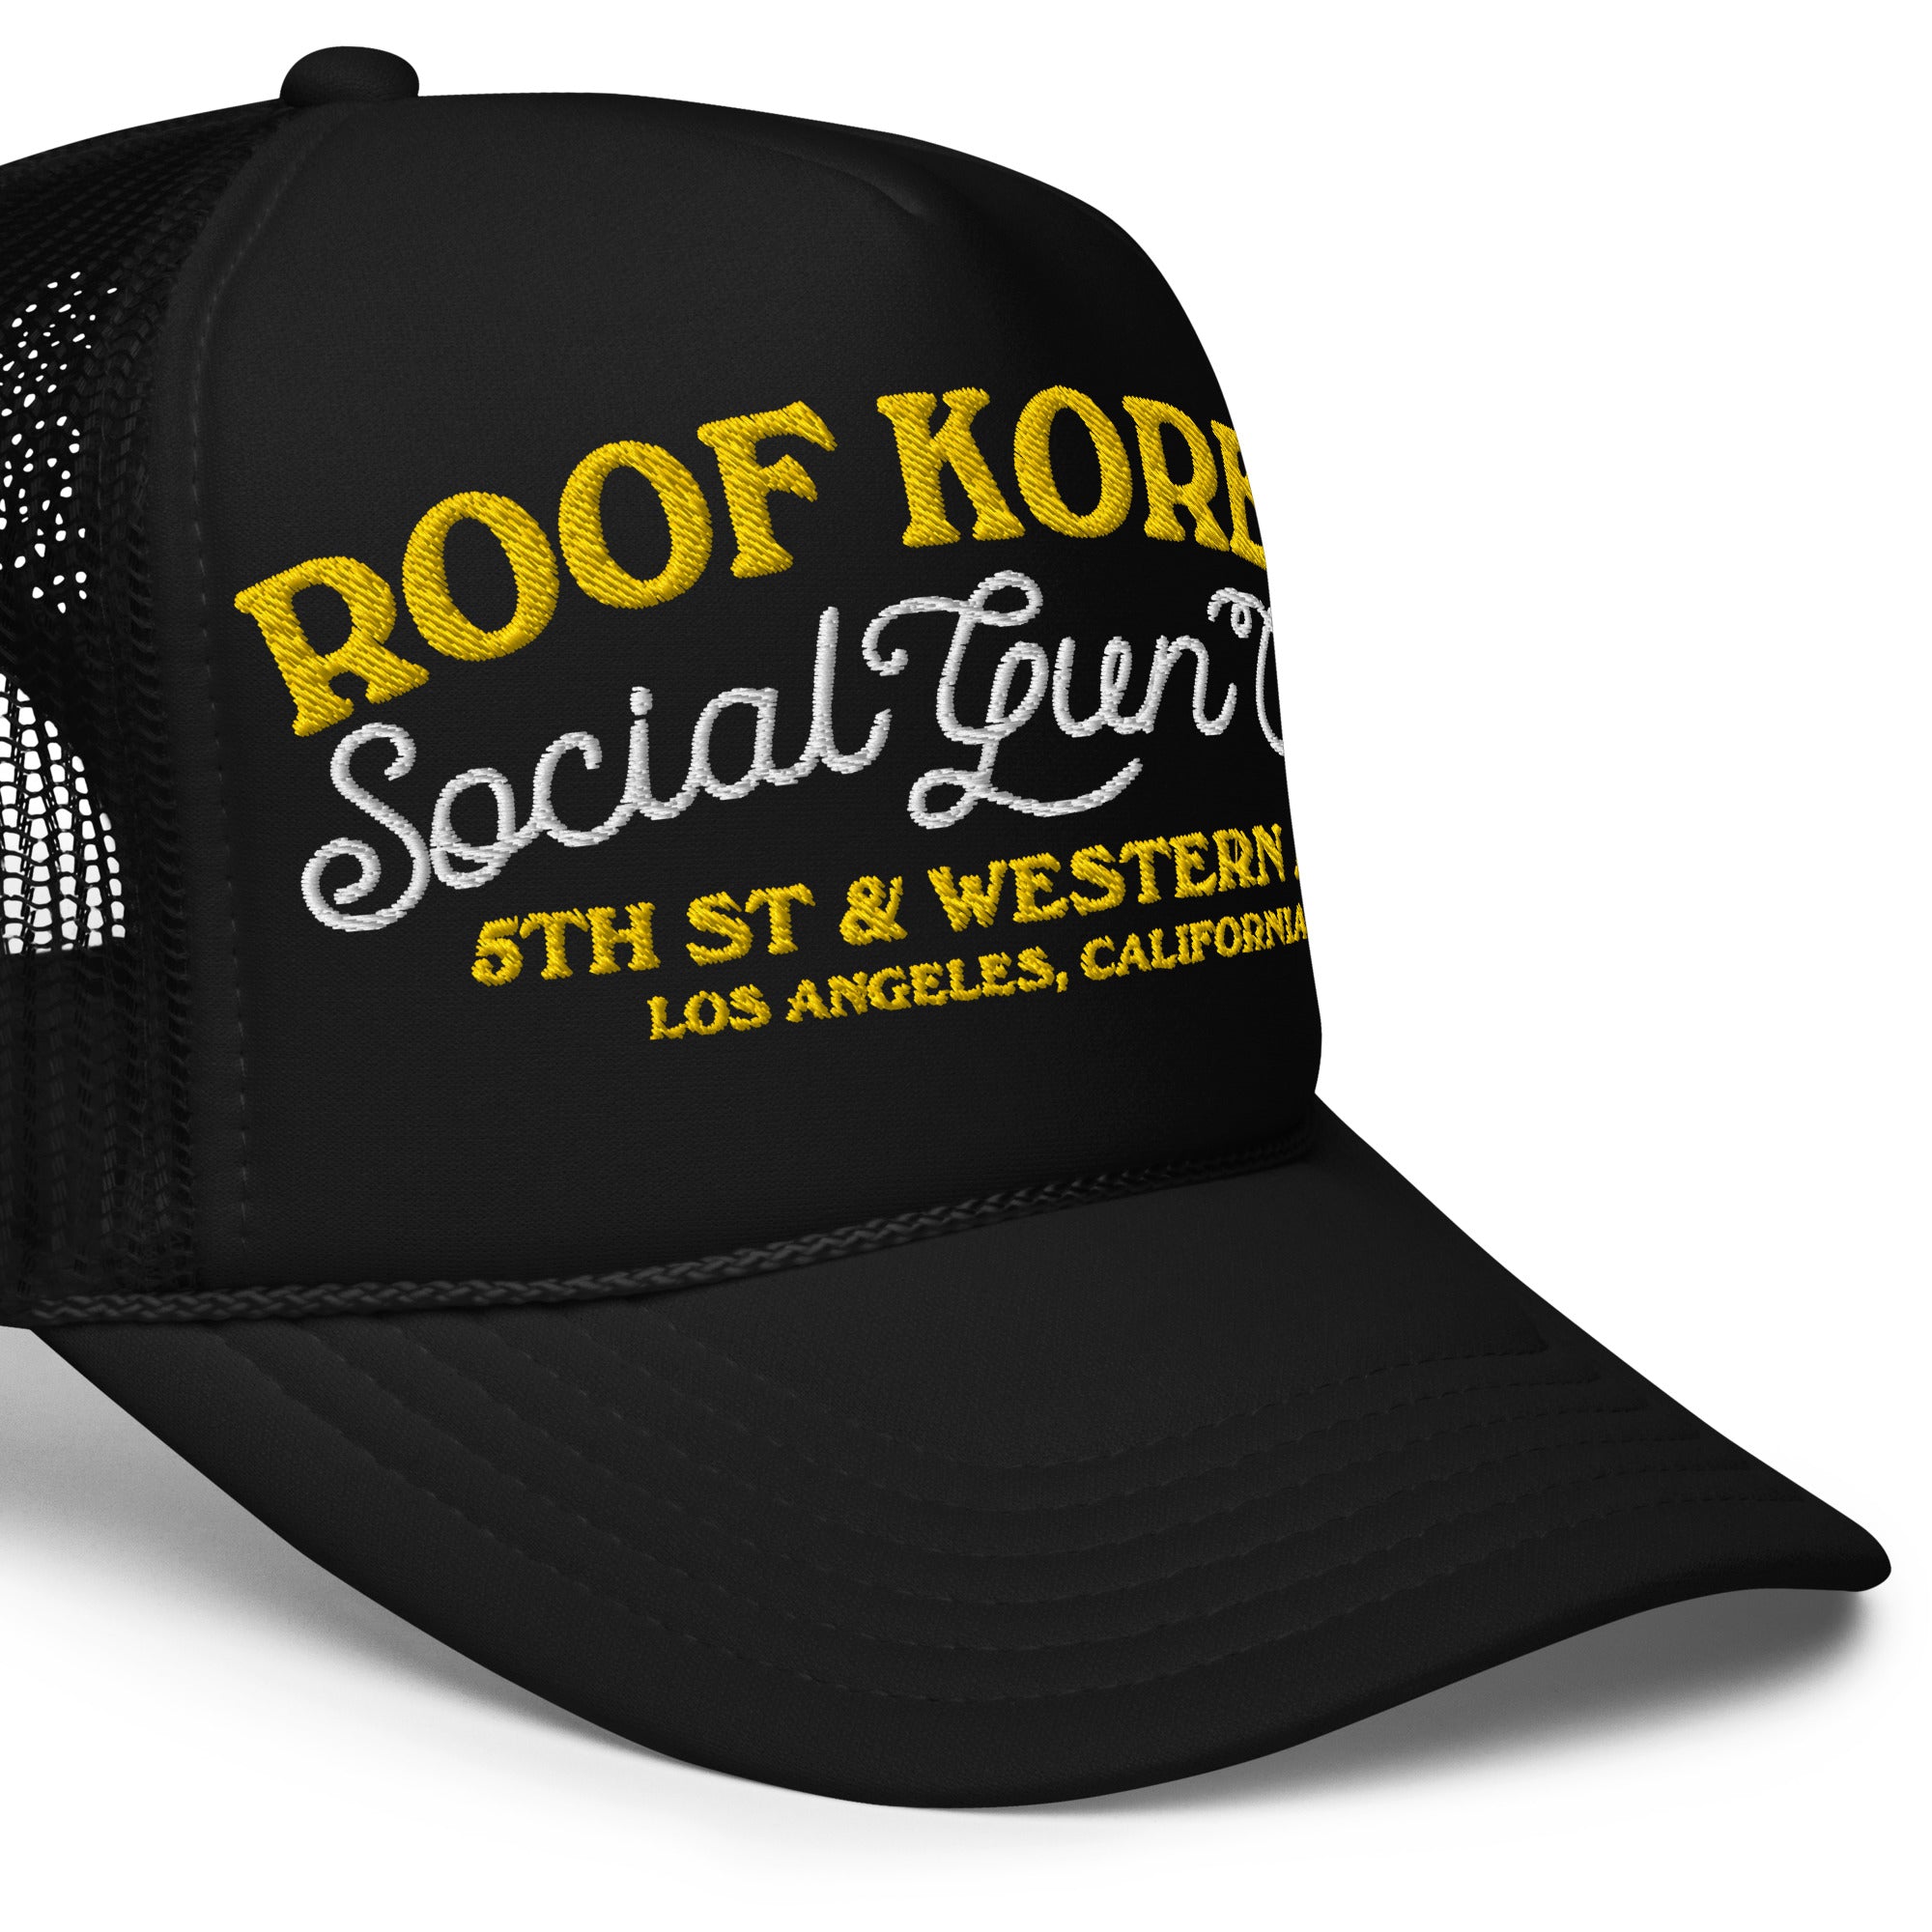 Roof Korean Social Gun Club Foam Trucker Hat